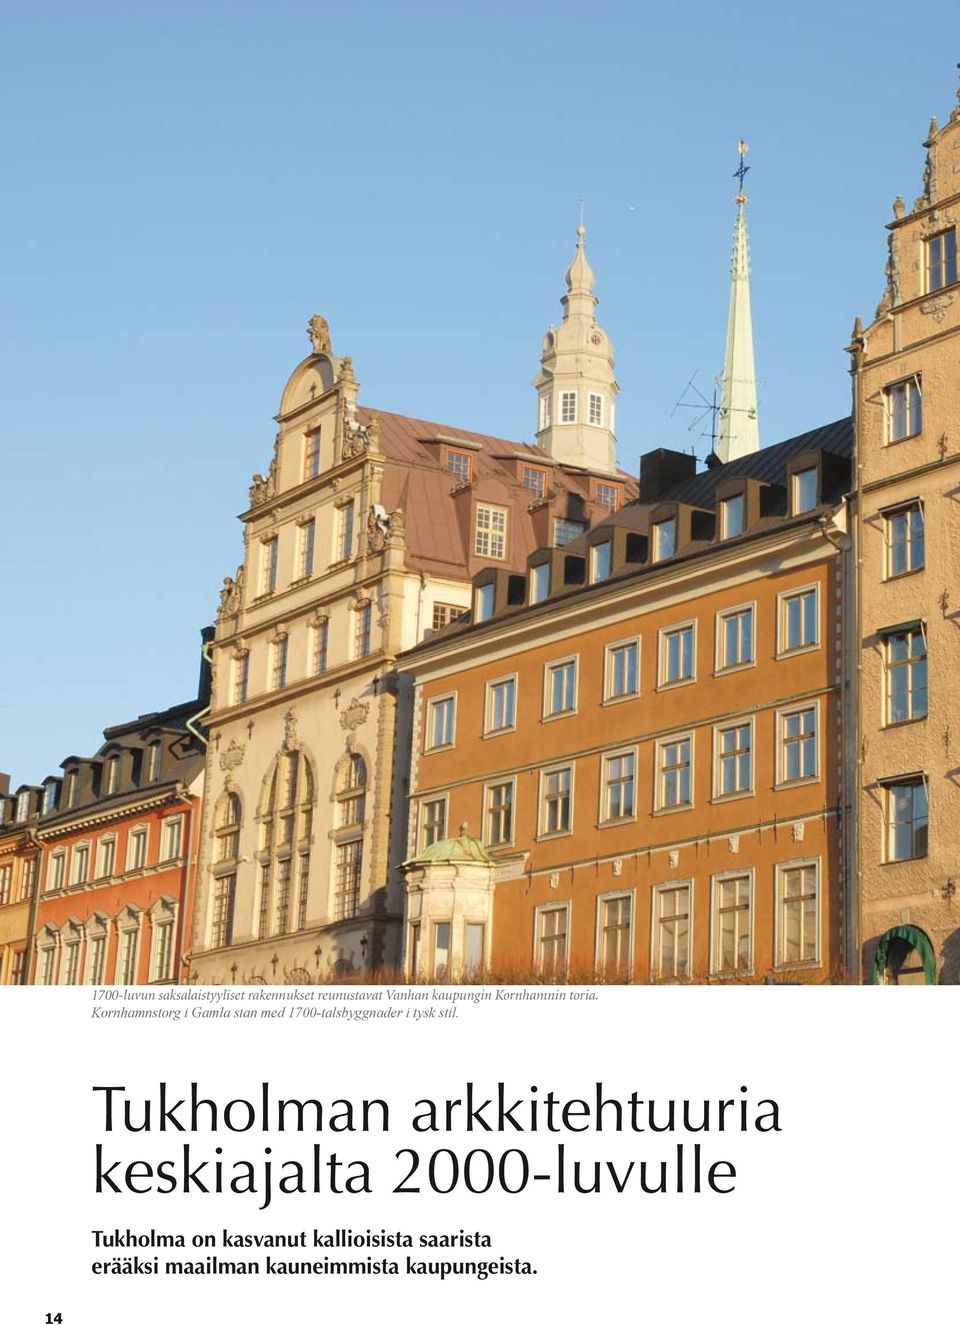 Kornhamnstorg i Gamla stan med 1700-talsbyggnader i tysk stil.